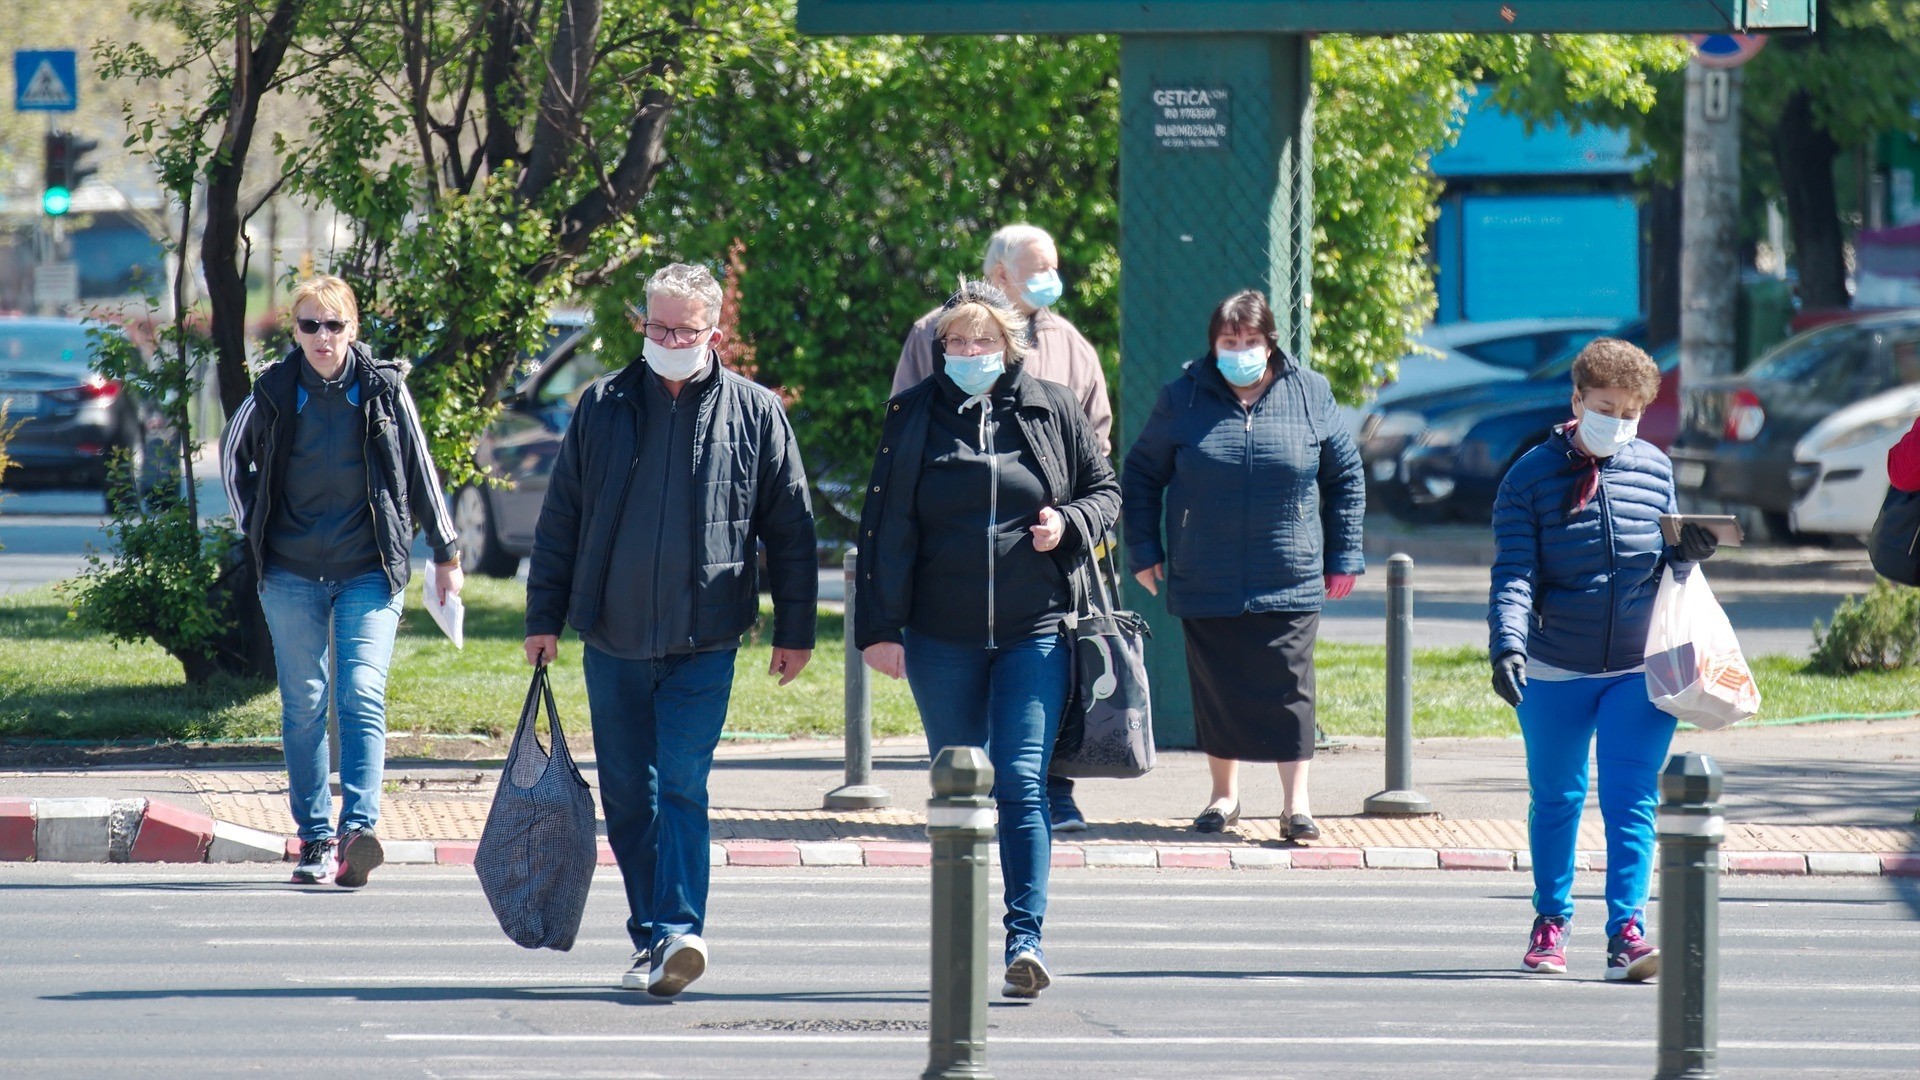 Seniors walking at a distance and wearing masks